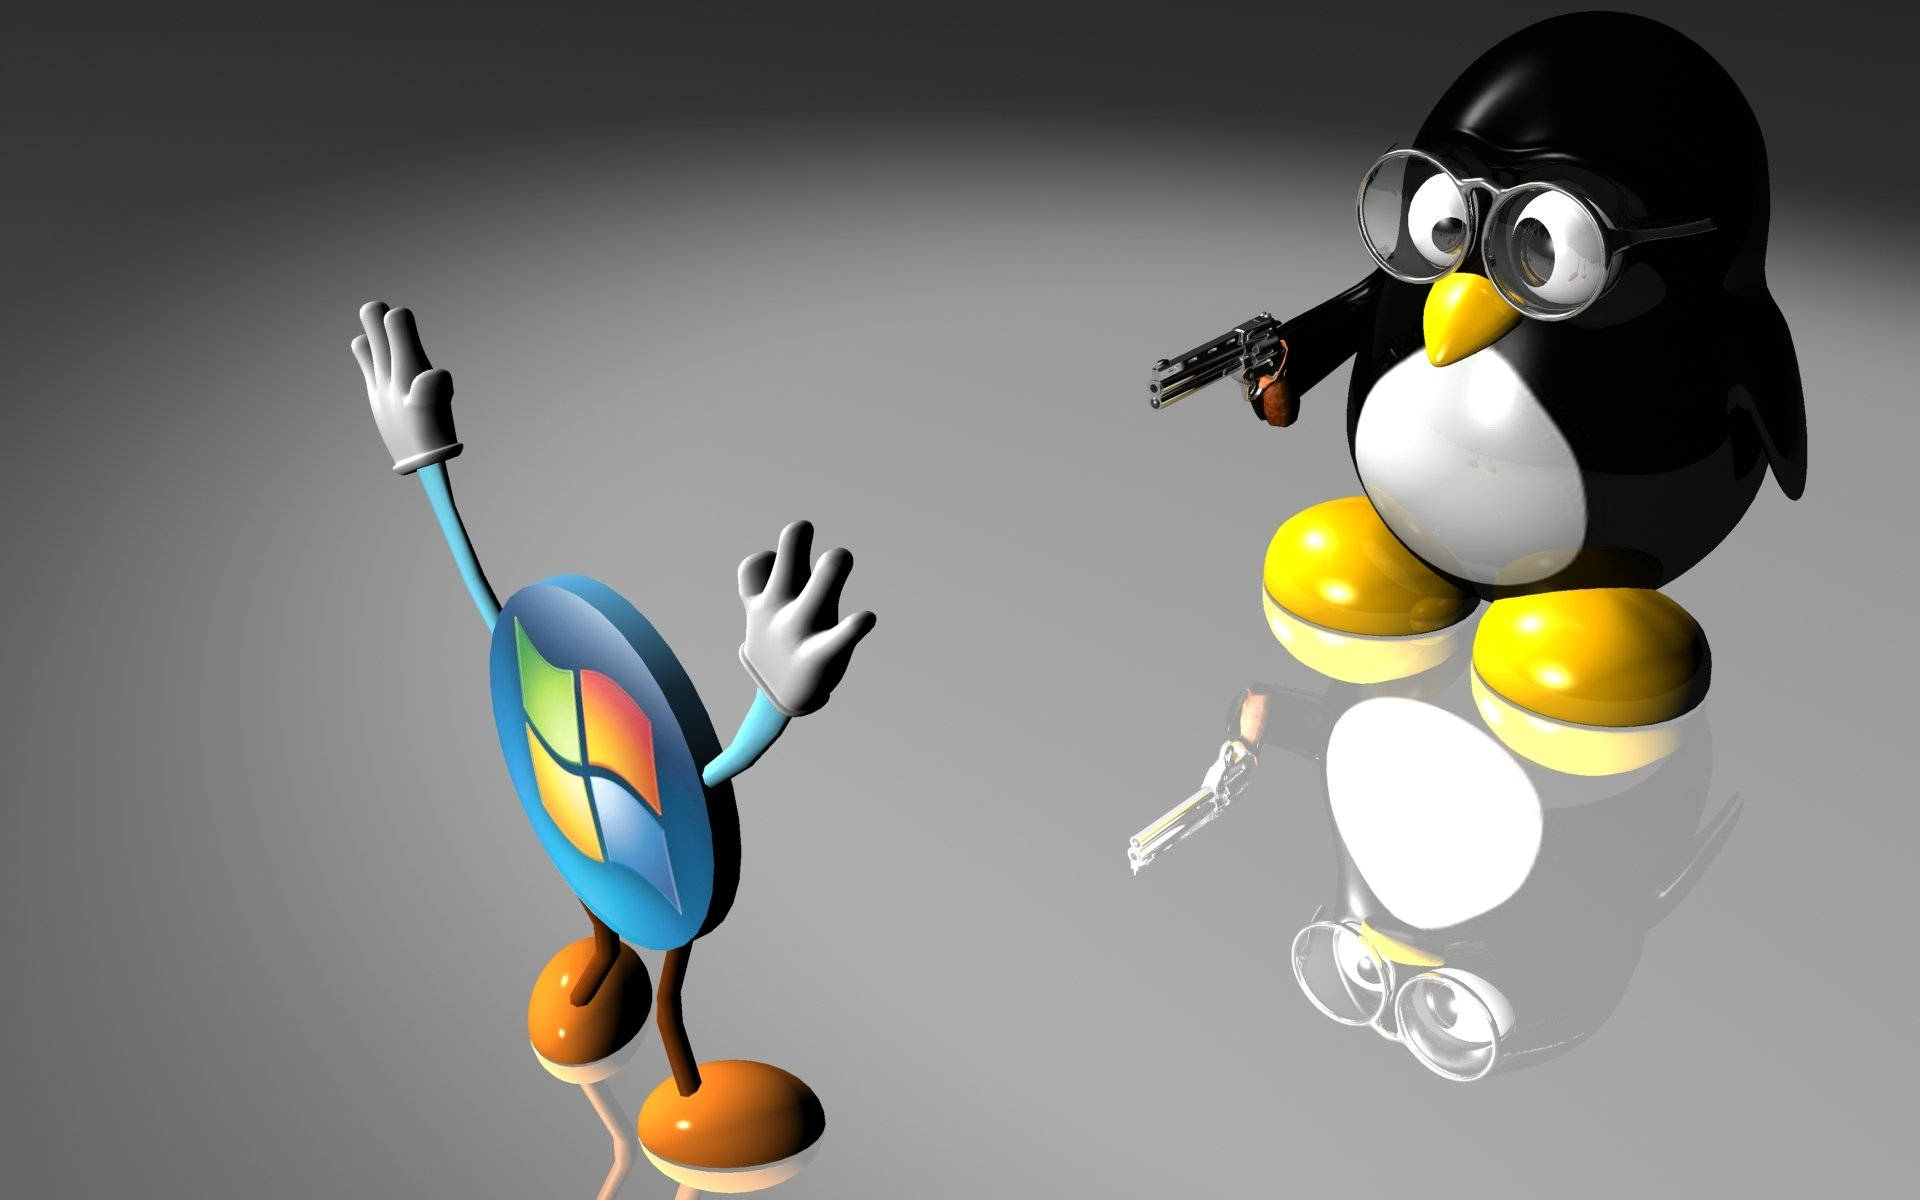 Linux Penguin Vs. Windows